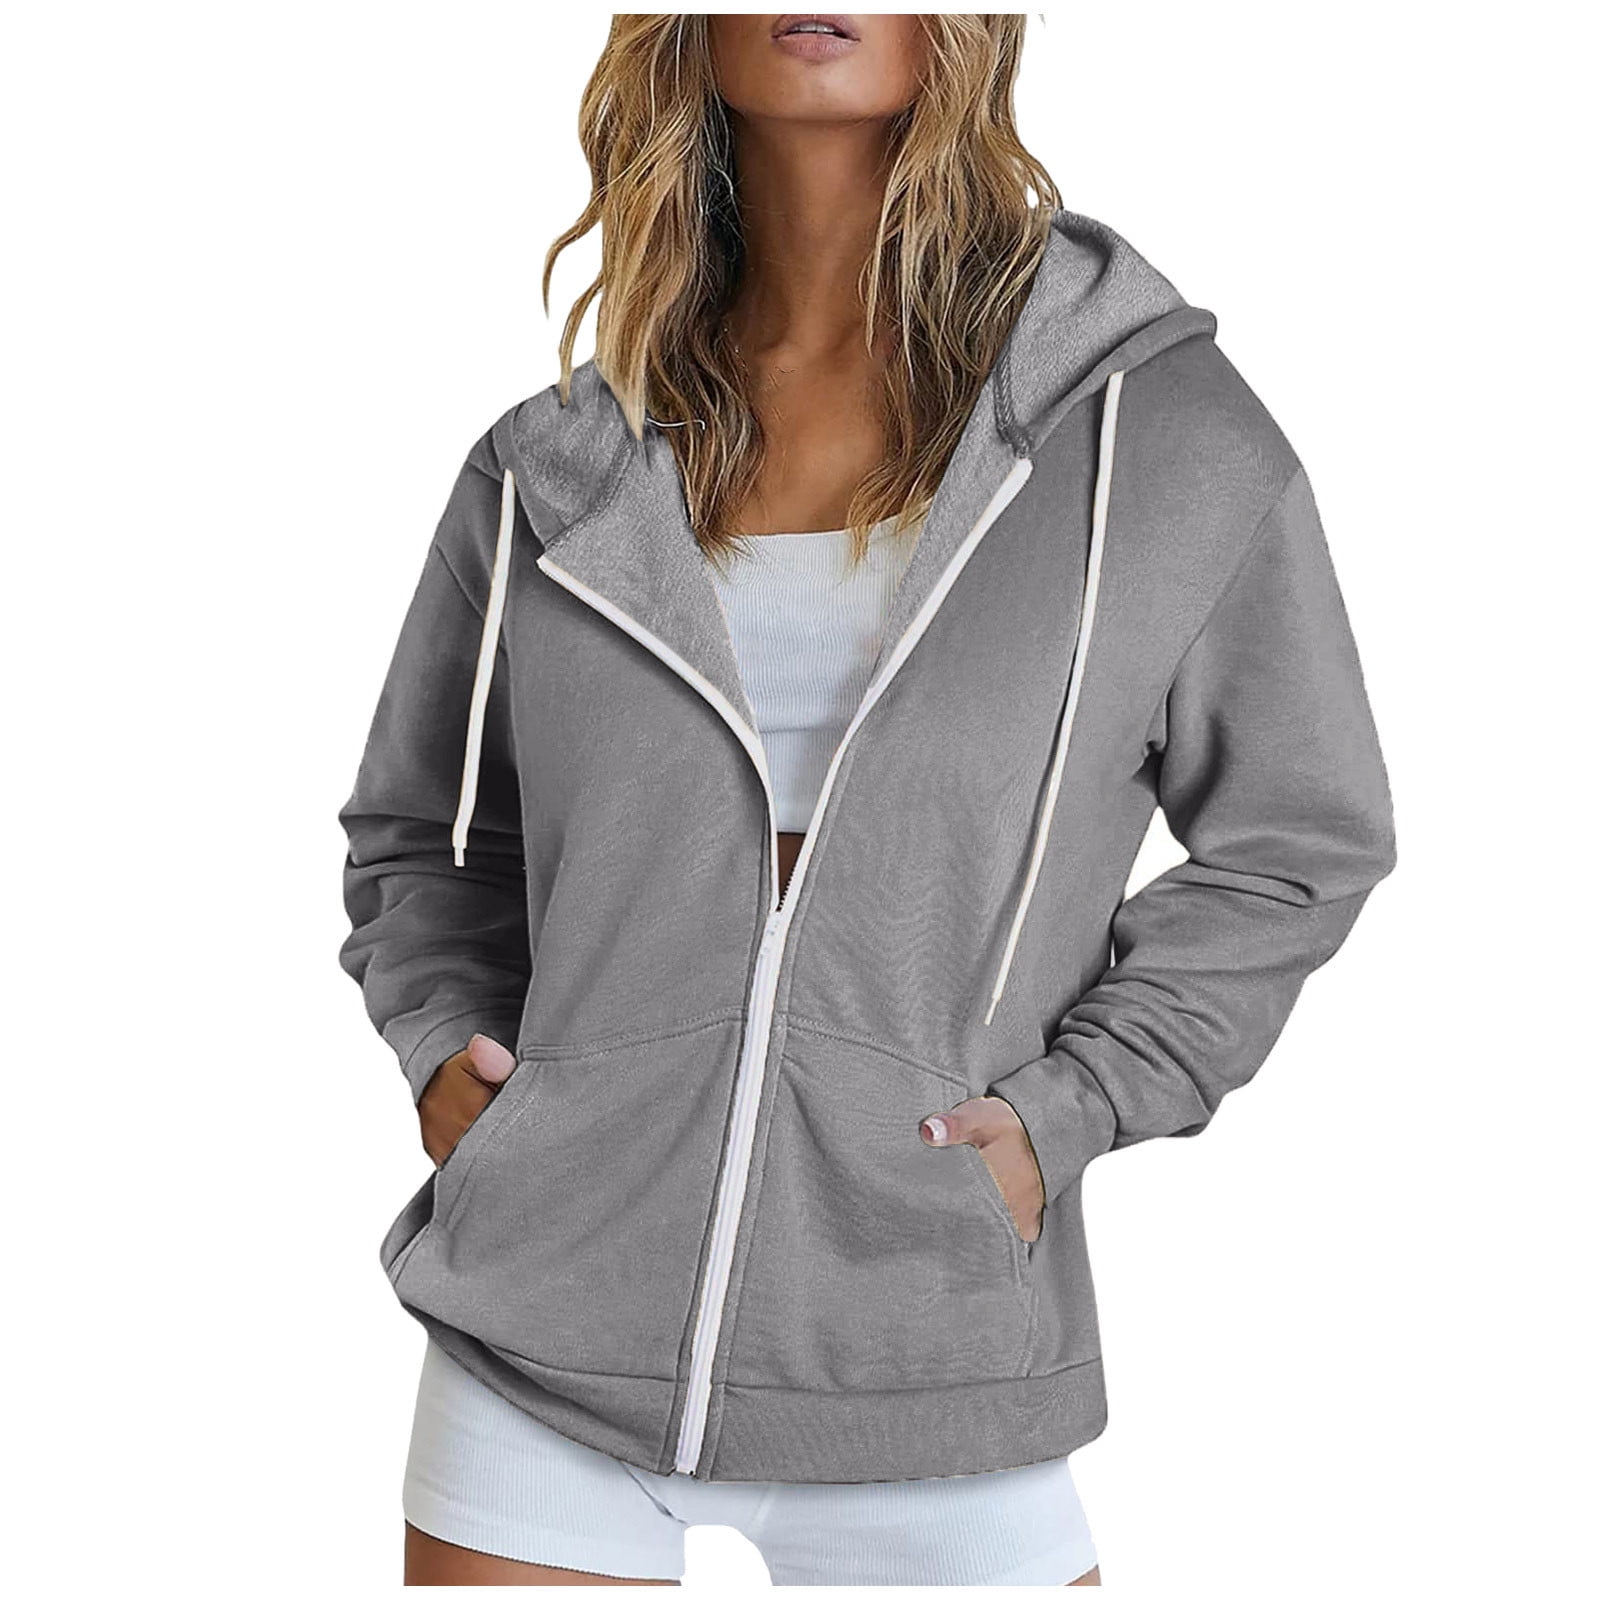 Full Zip-up Jackets with Pockets for Women Cotton Fleece Plain Hoodie  Outwear Drawstring Hooded Sweatshirt Coat (Large, Wine 01) 